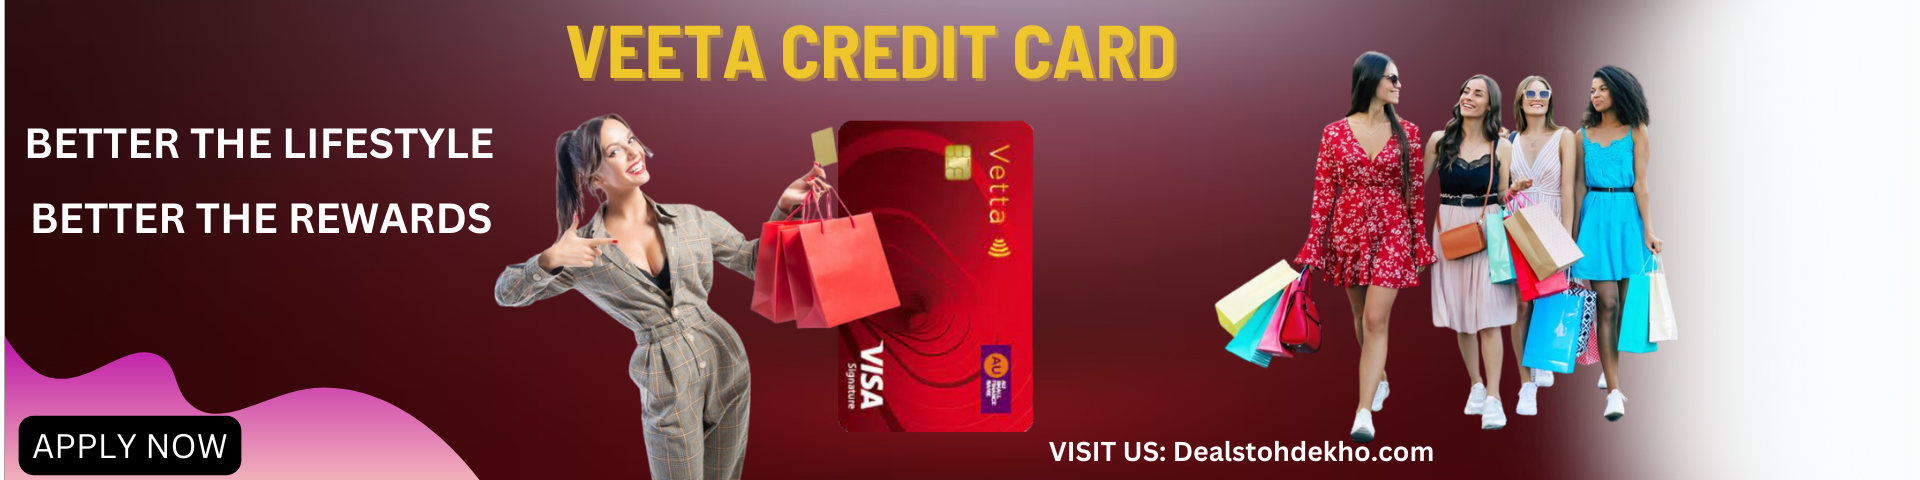 veeta credit card banner